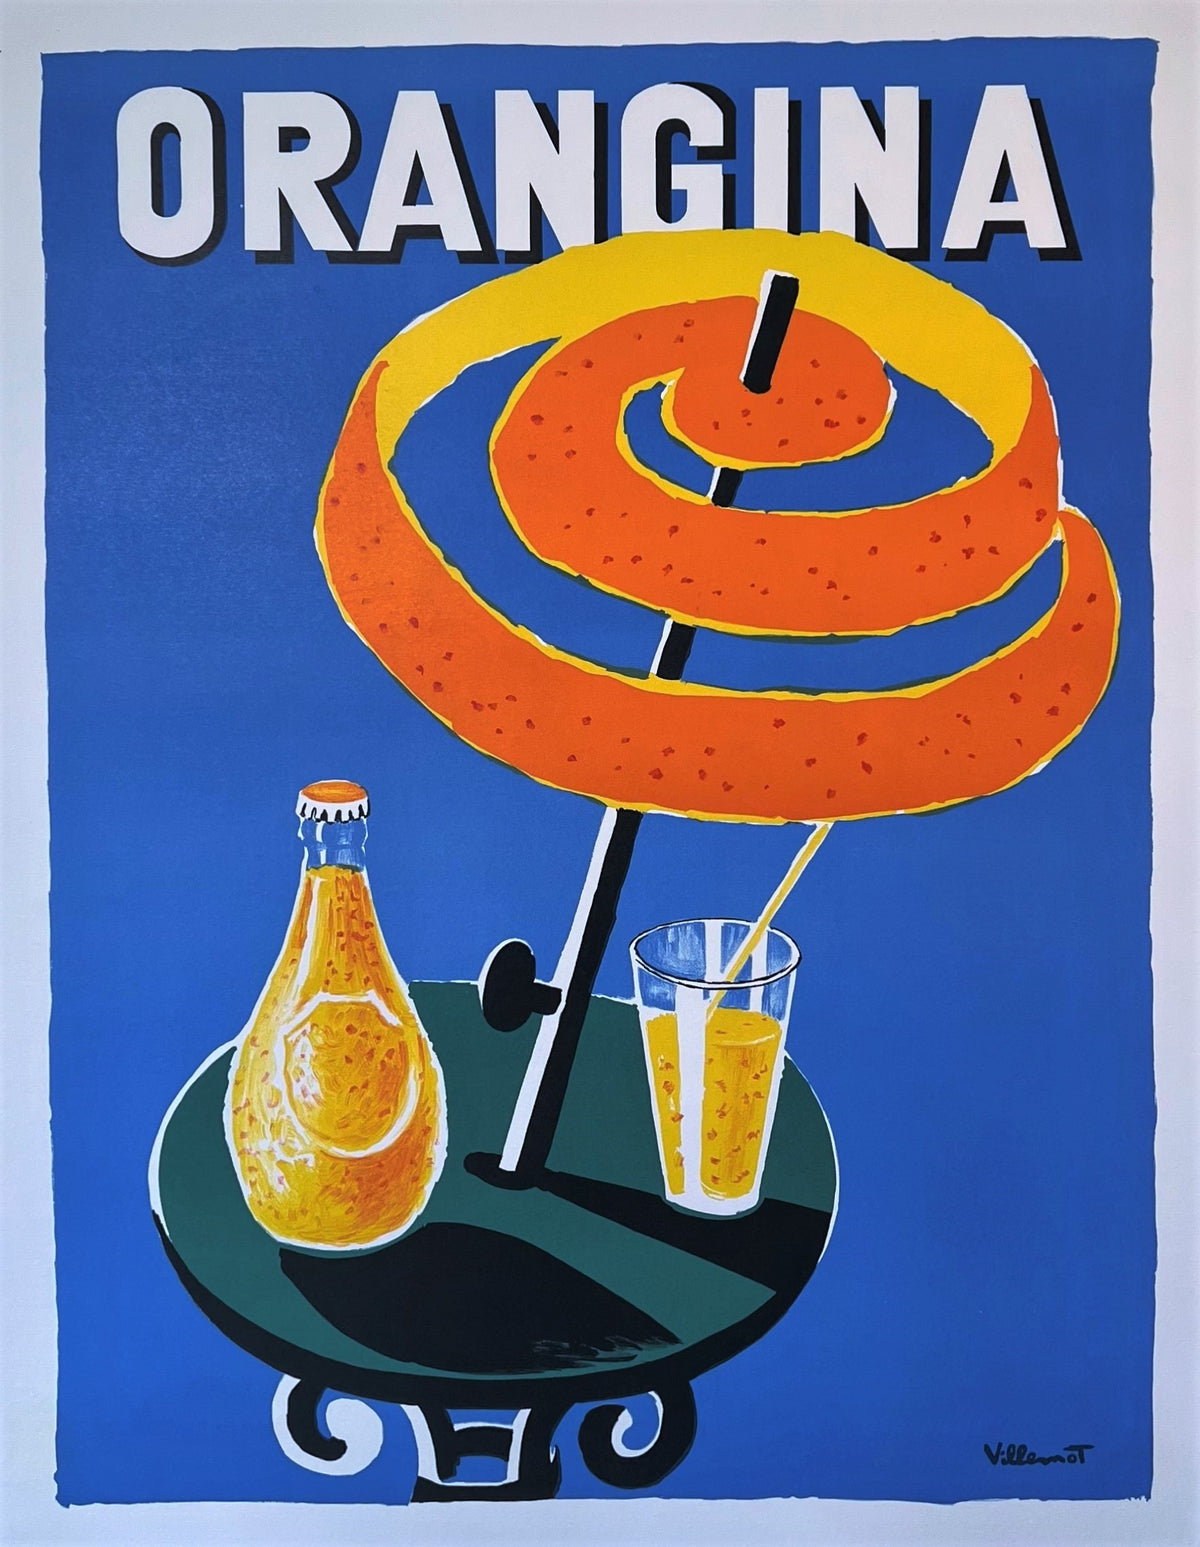 Orangina by Villemot - Authentic Vintage Poster